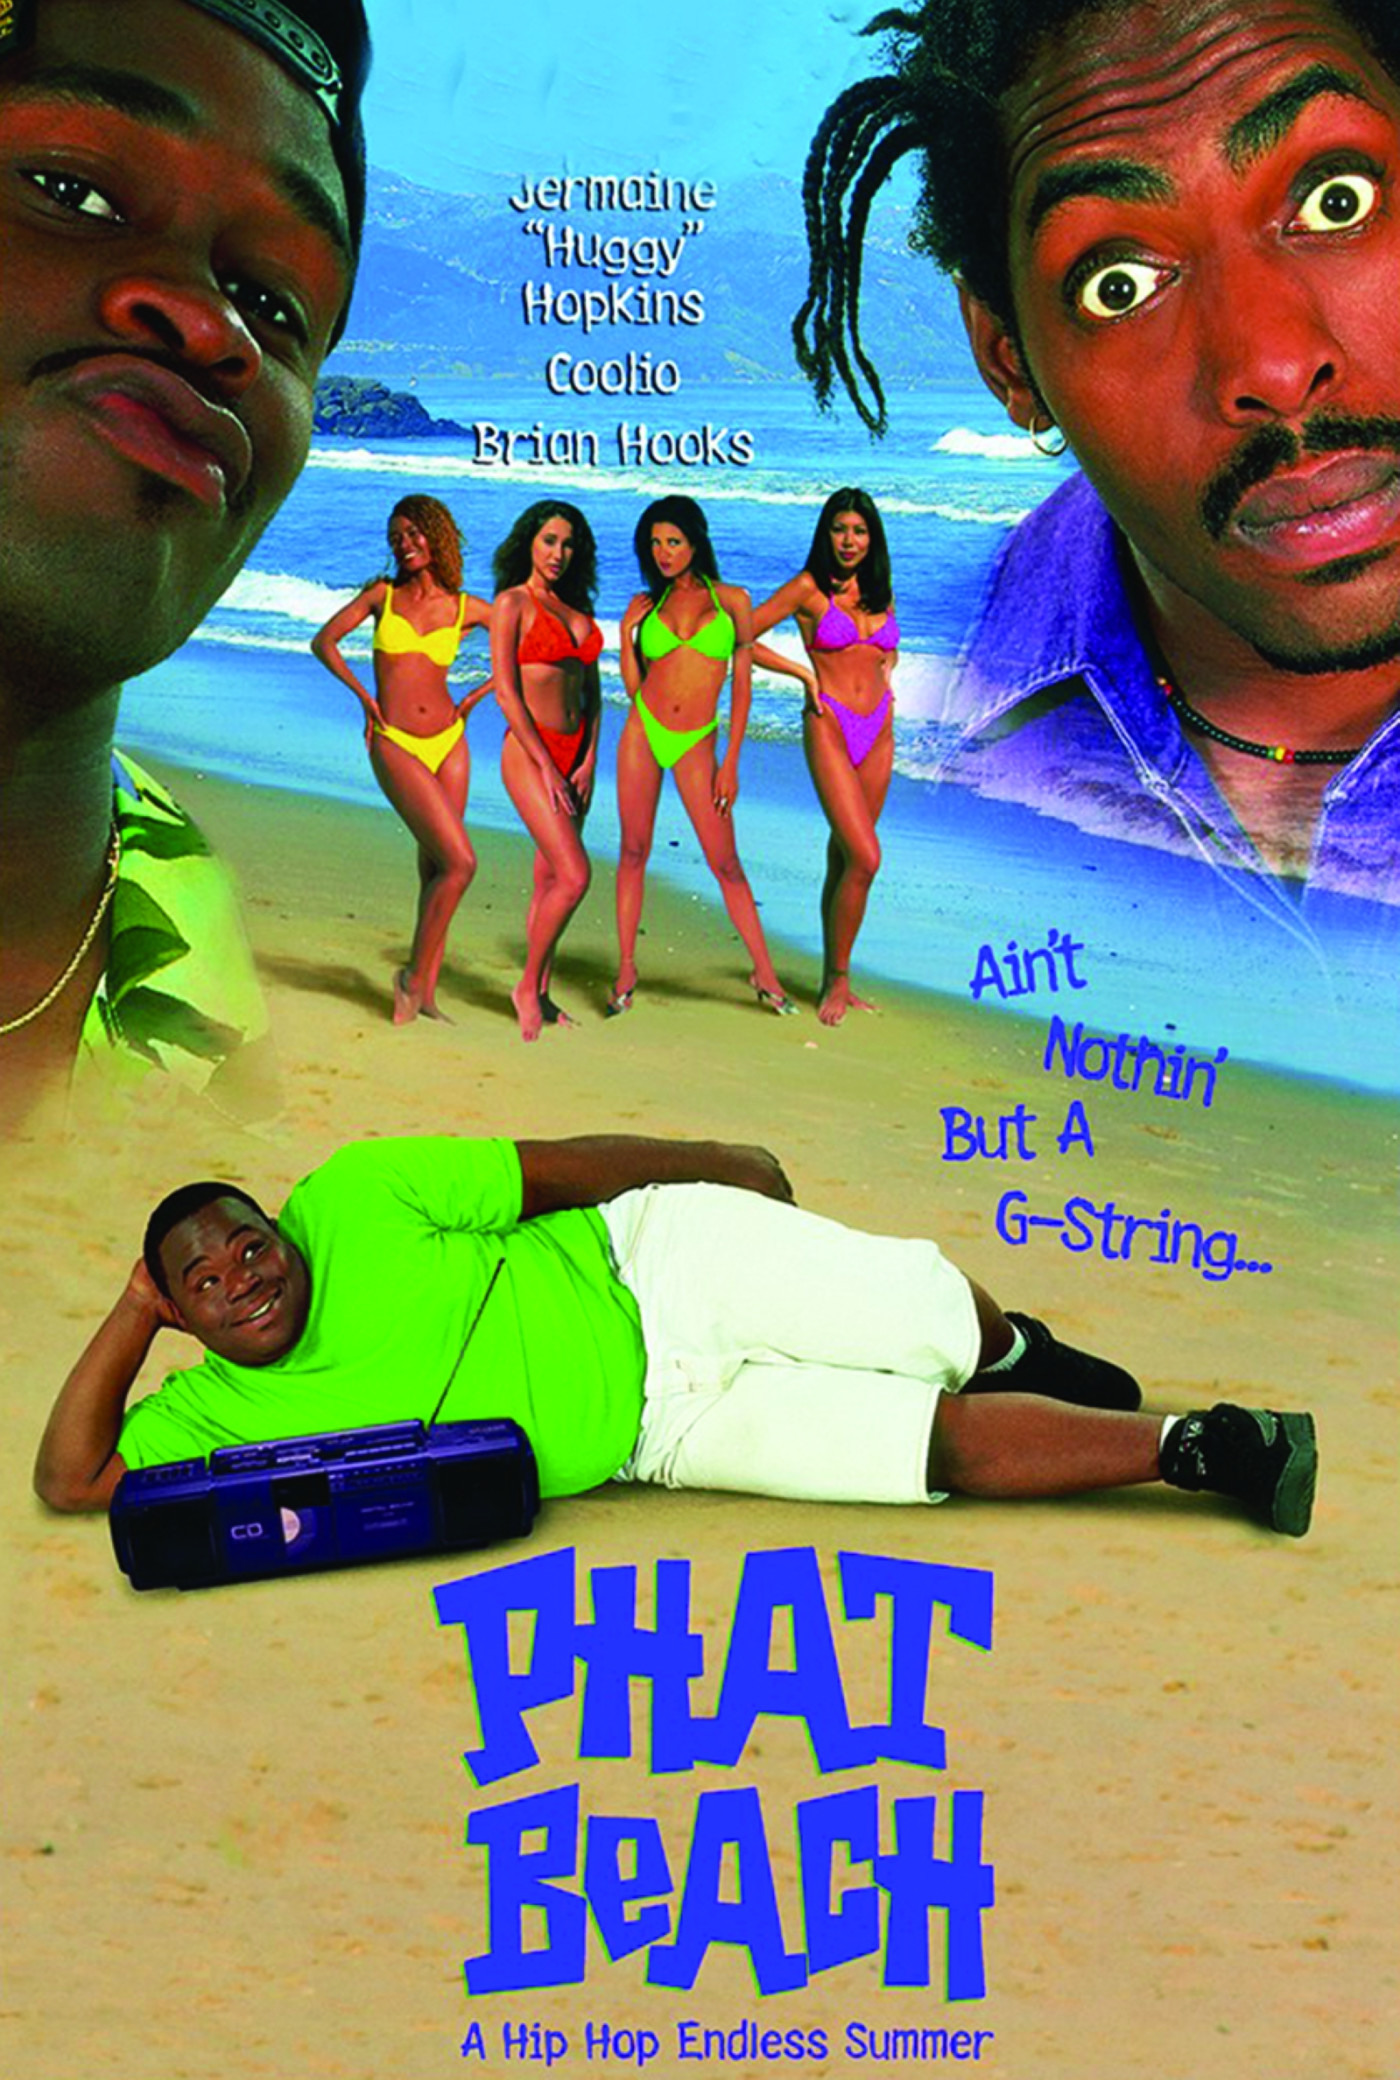 Beach Girls Porn Movie - The Oral History of Phat Beach | Complex